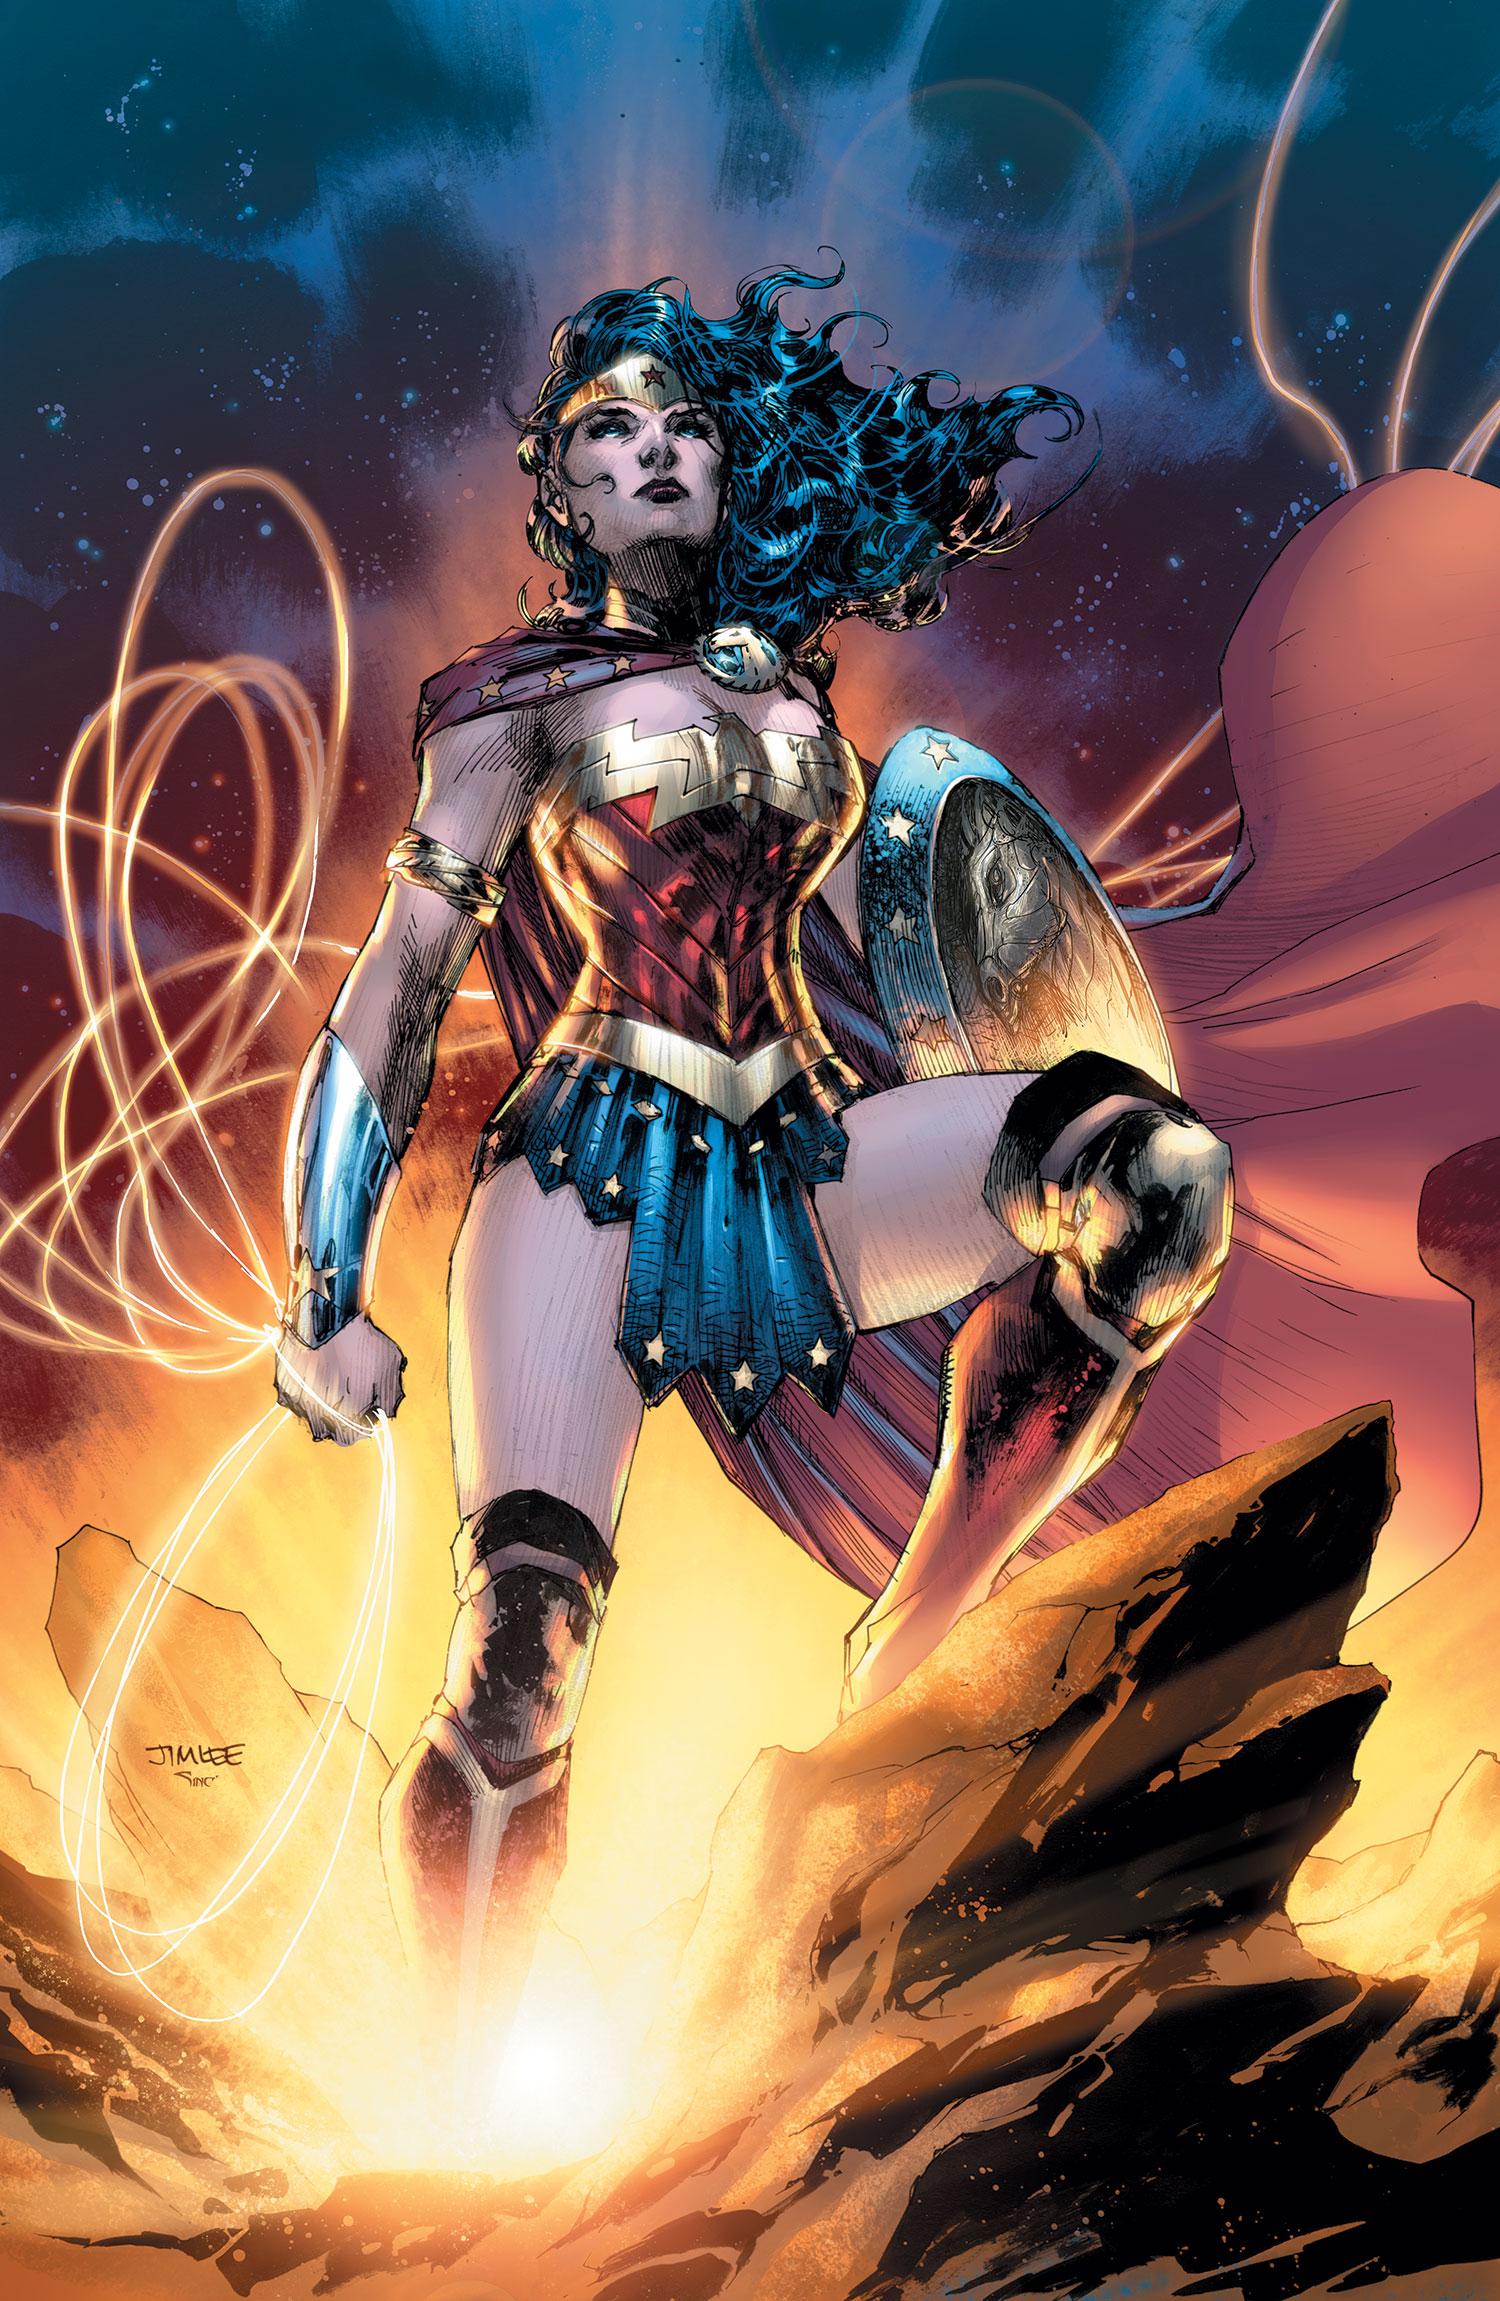 Wonder Woman Picture by Jim Lee